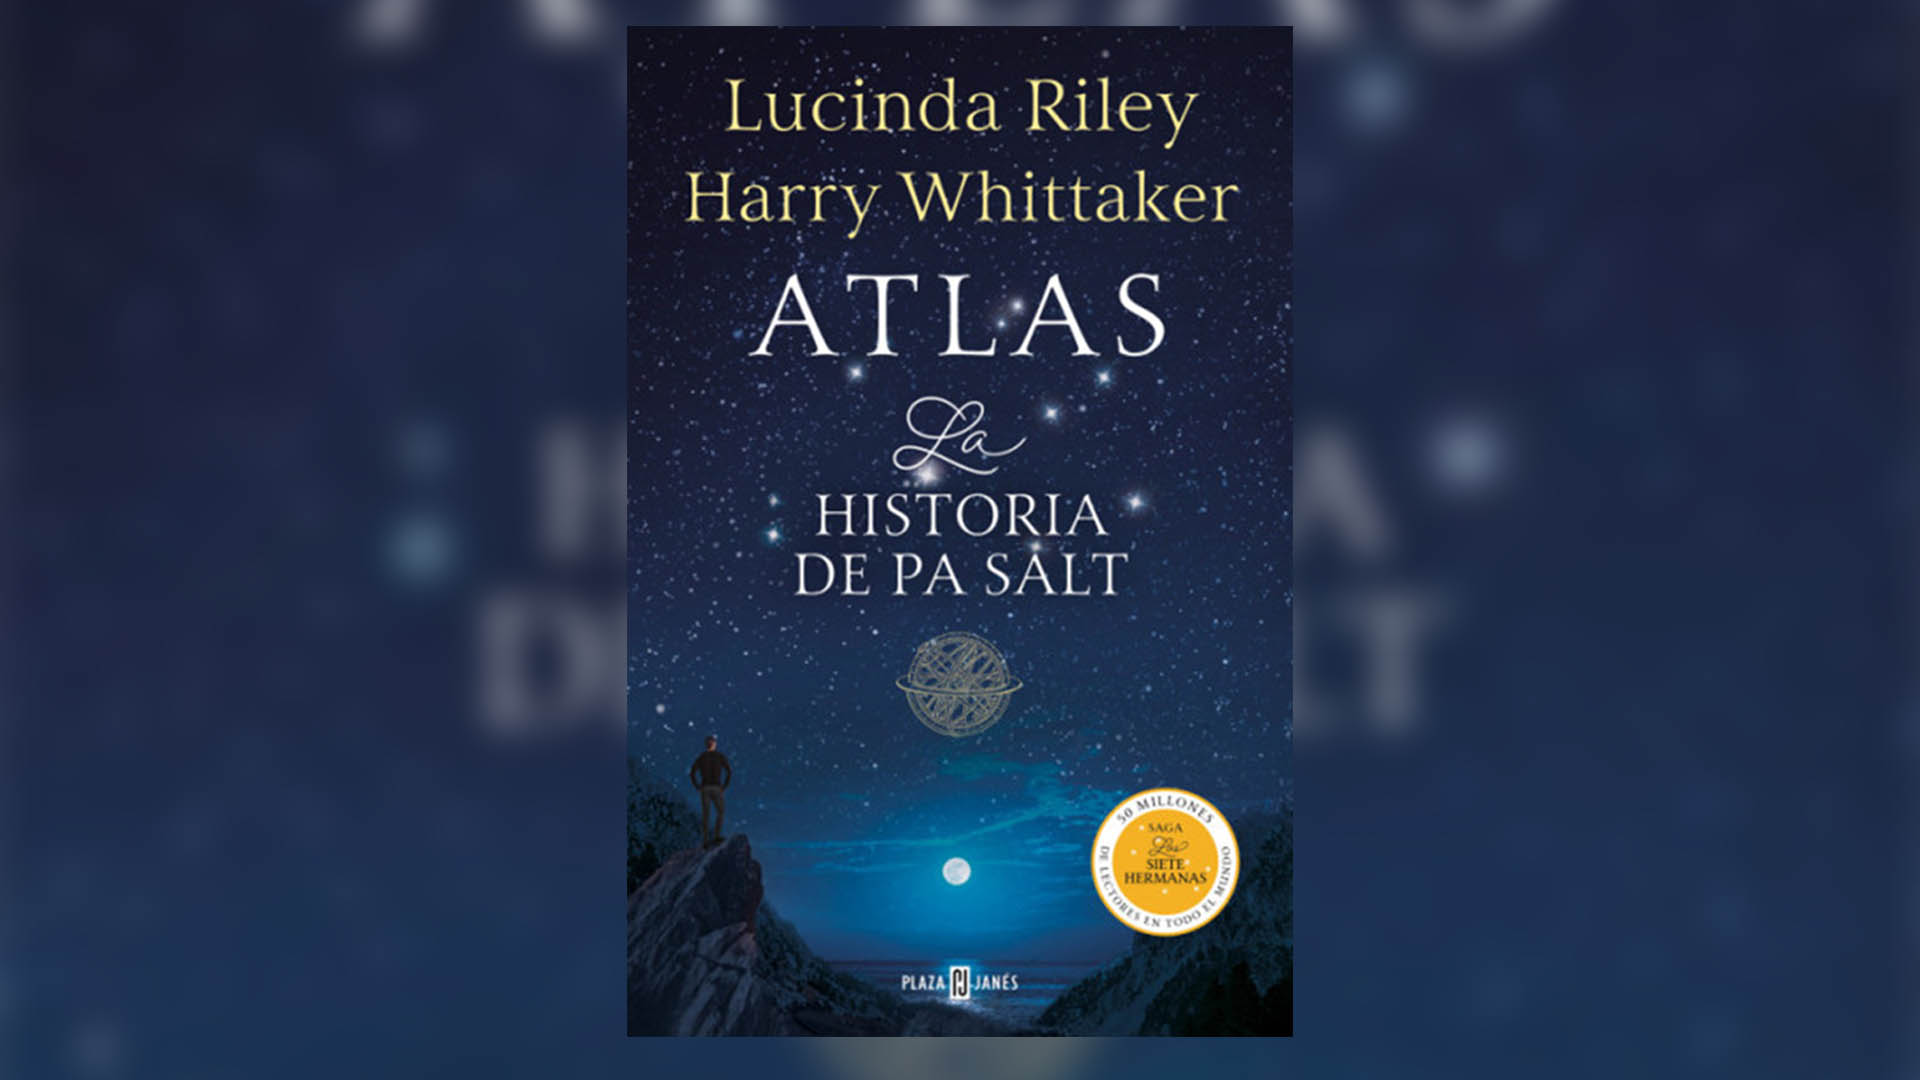 “Atlas. La historia de Pa Salt (Las Siete Hermanas 8)”, de Lucinda Riley y Harry Whittaker.